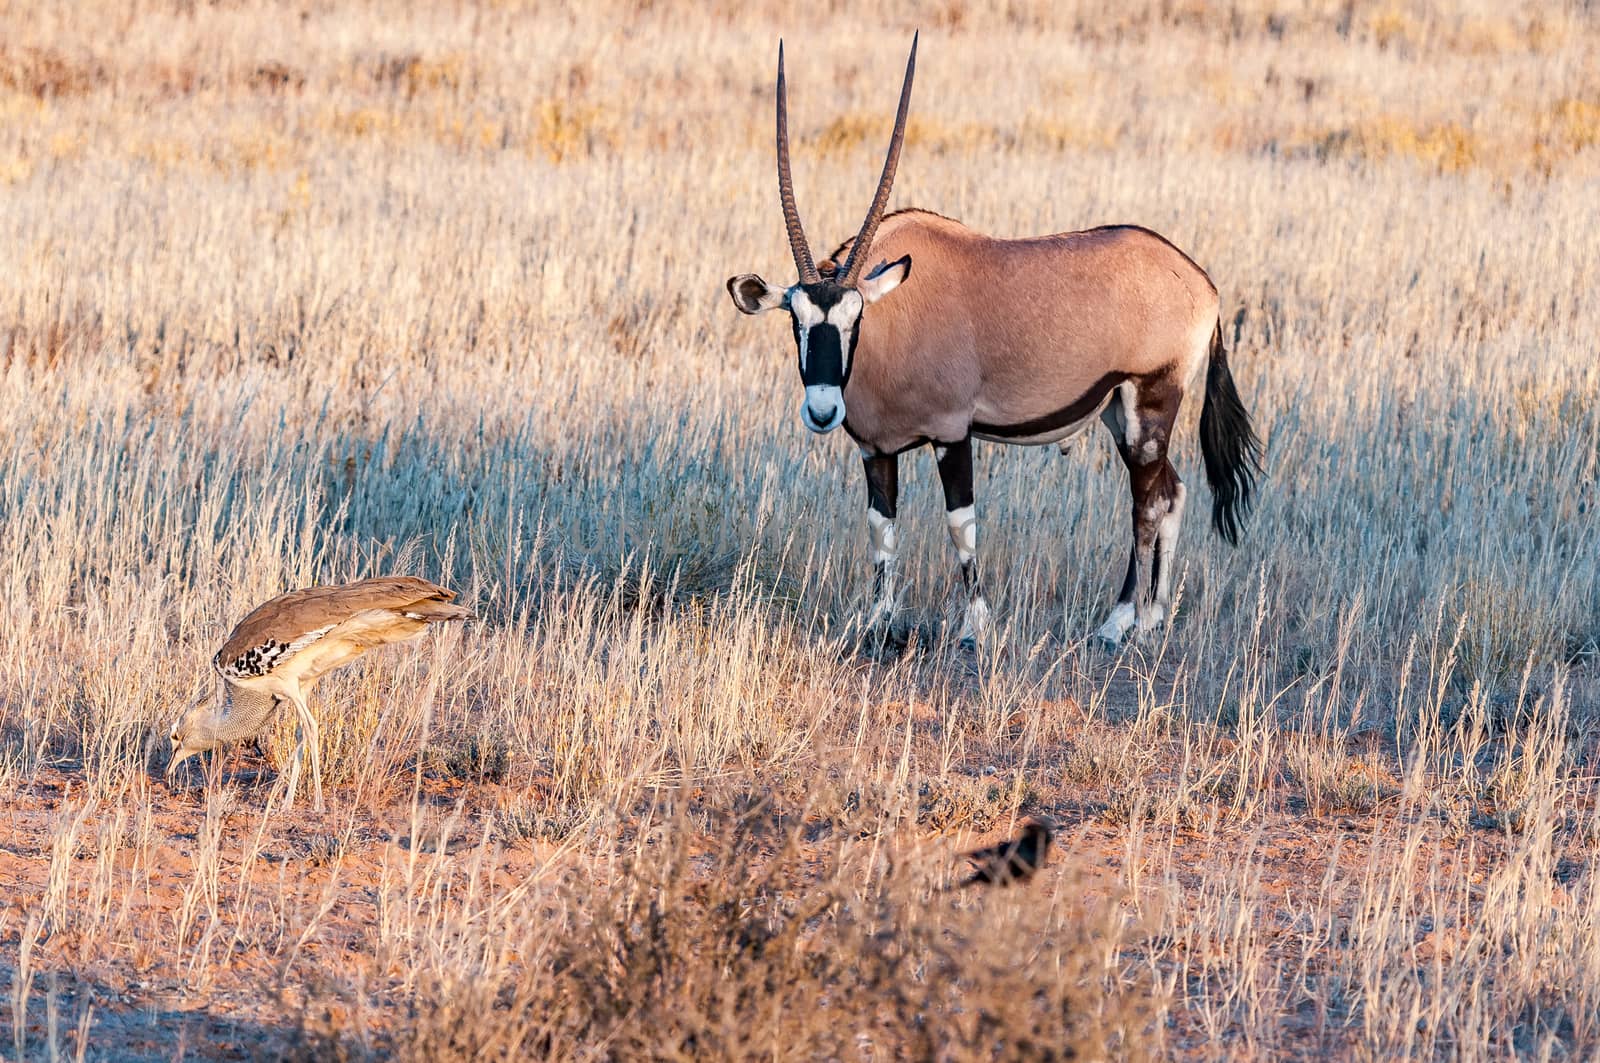 Oryx and Kori Bustard in the arid Kgalagadi by dpreezg